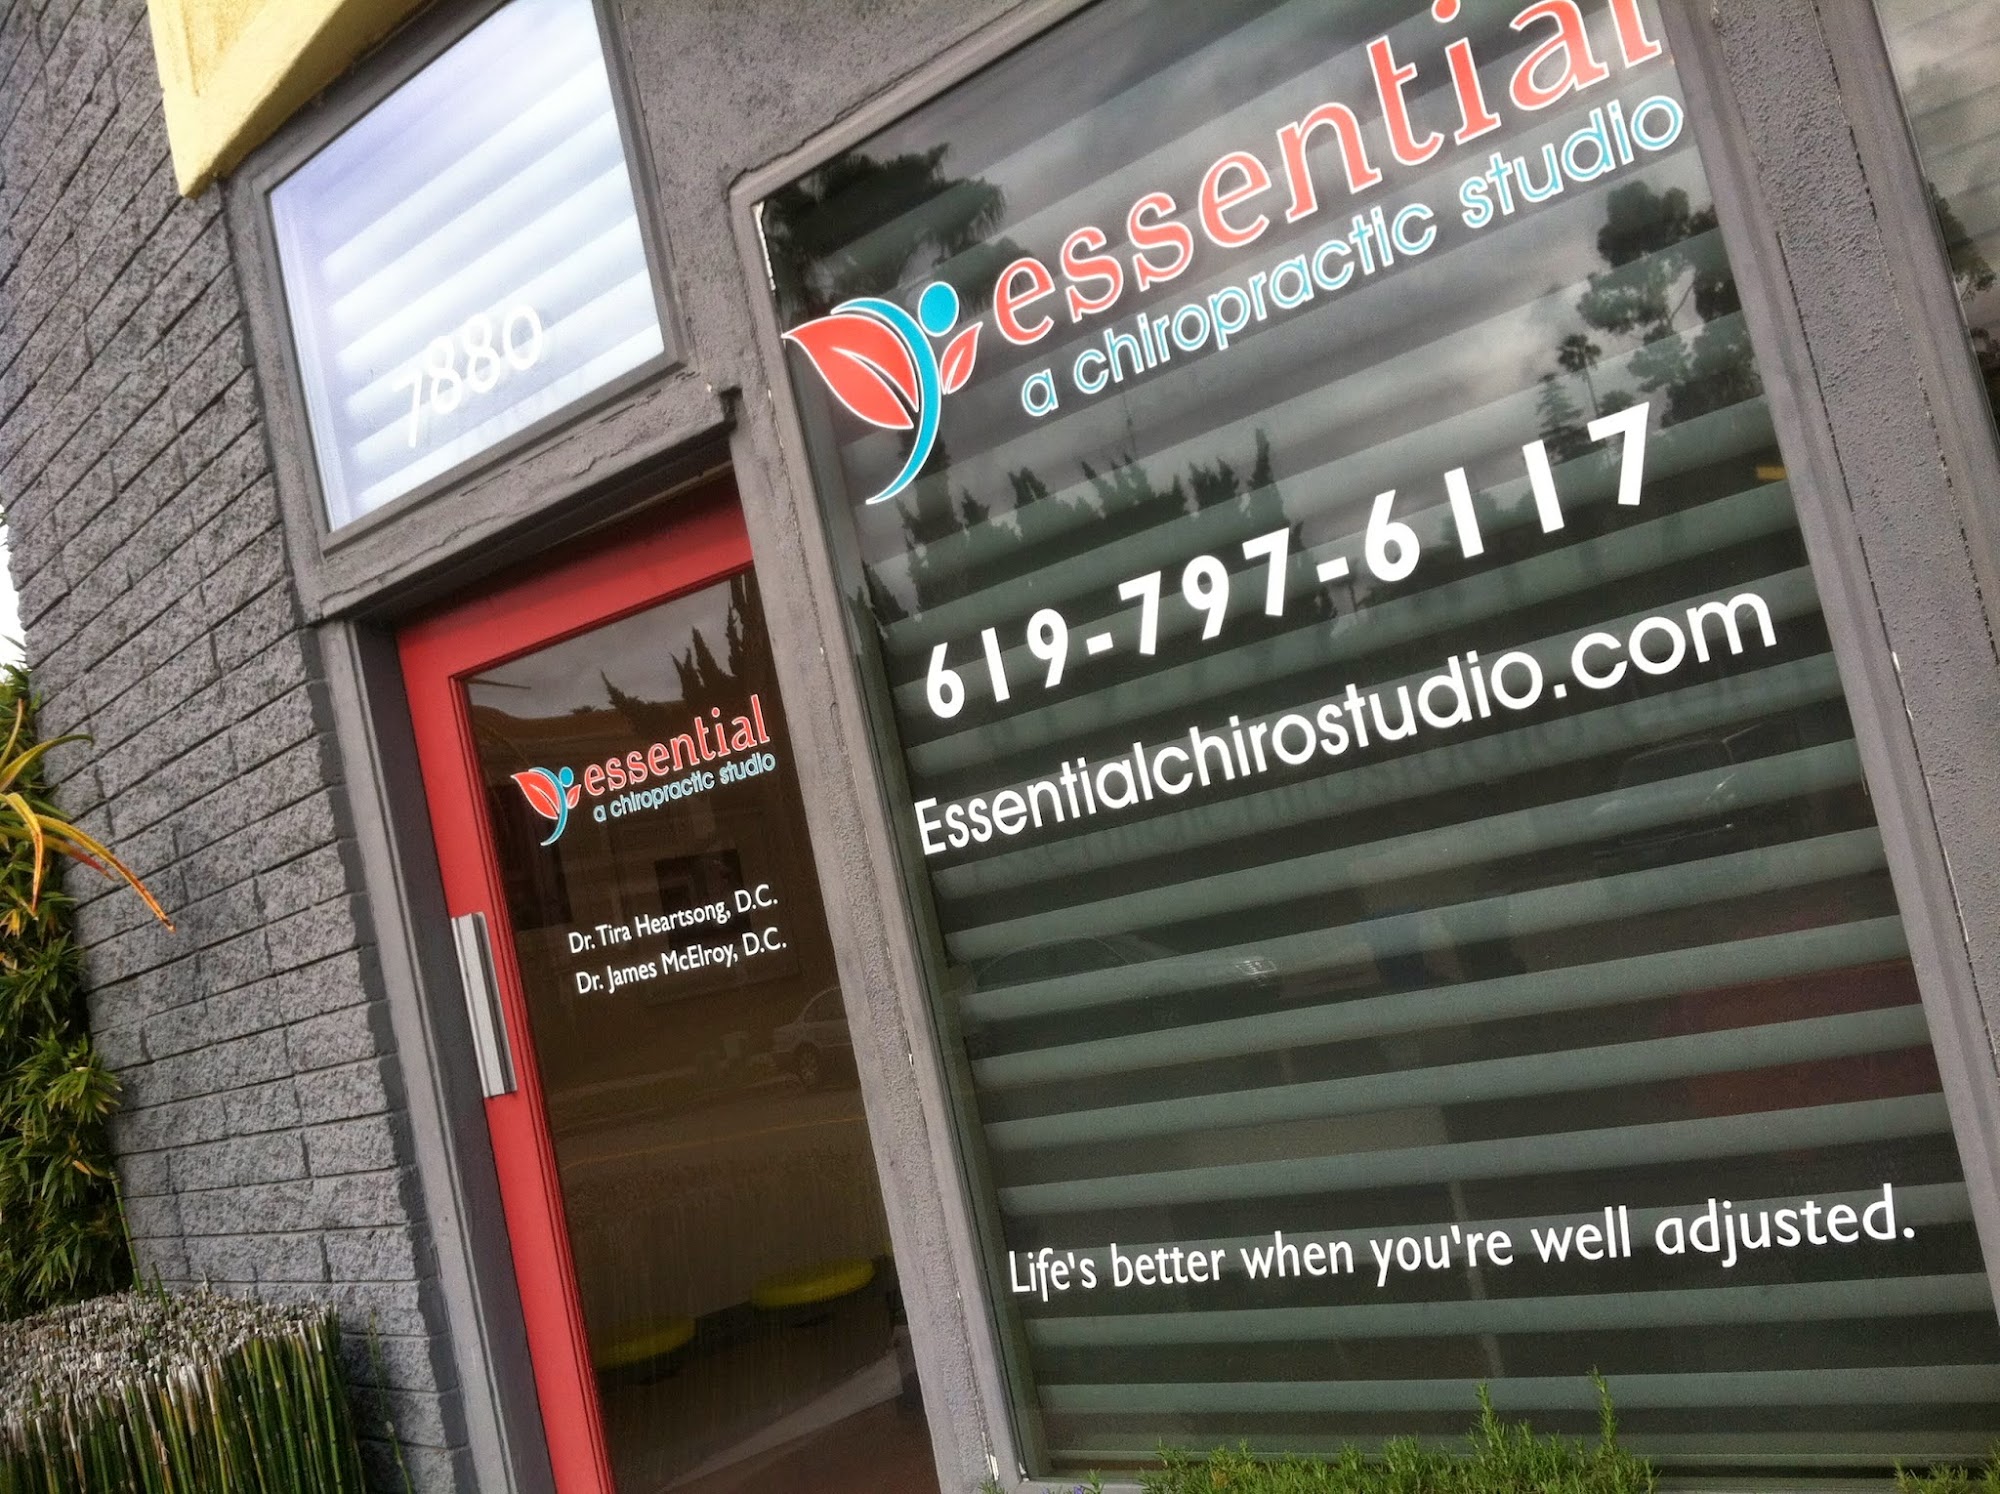 Essential | a chiropractic studio